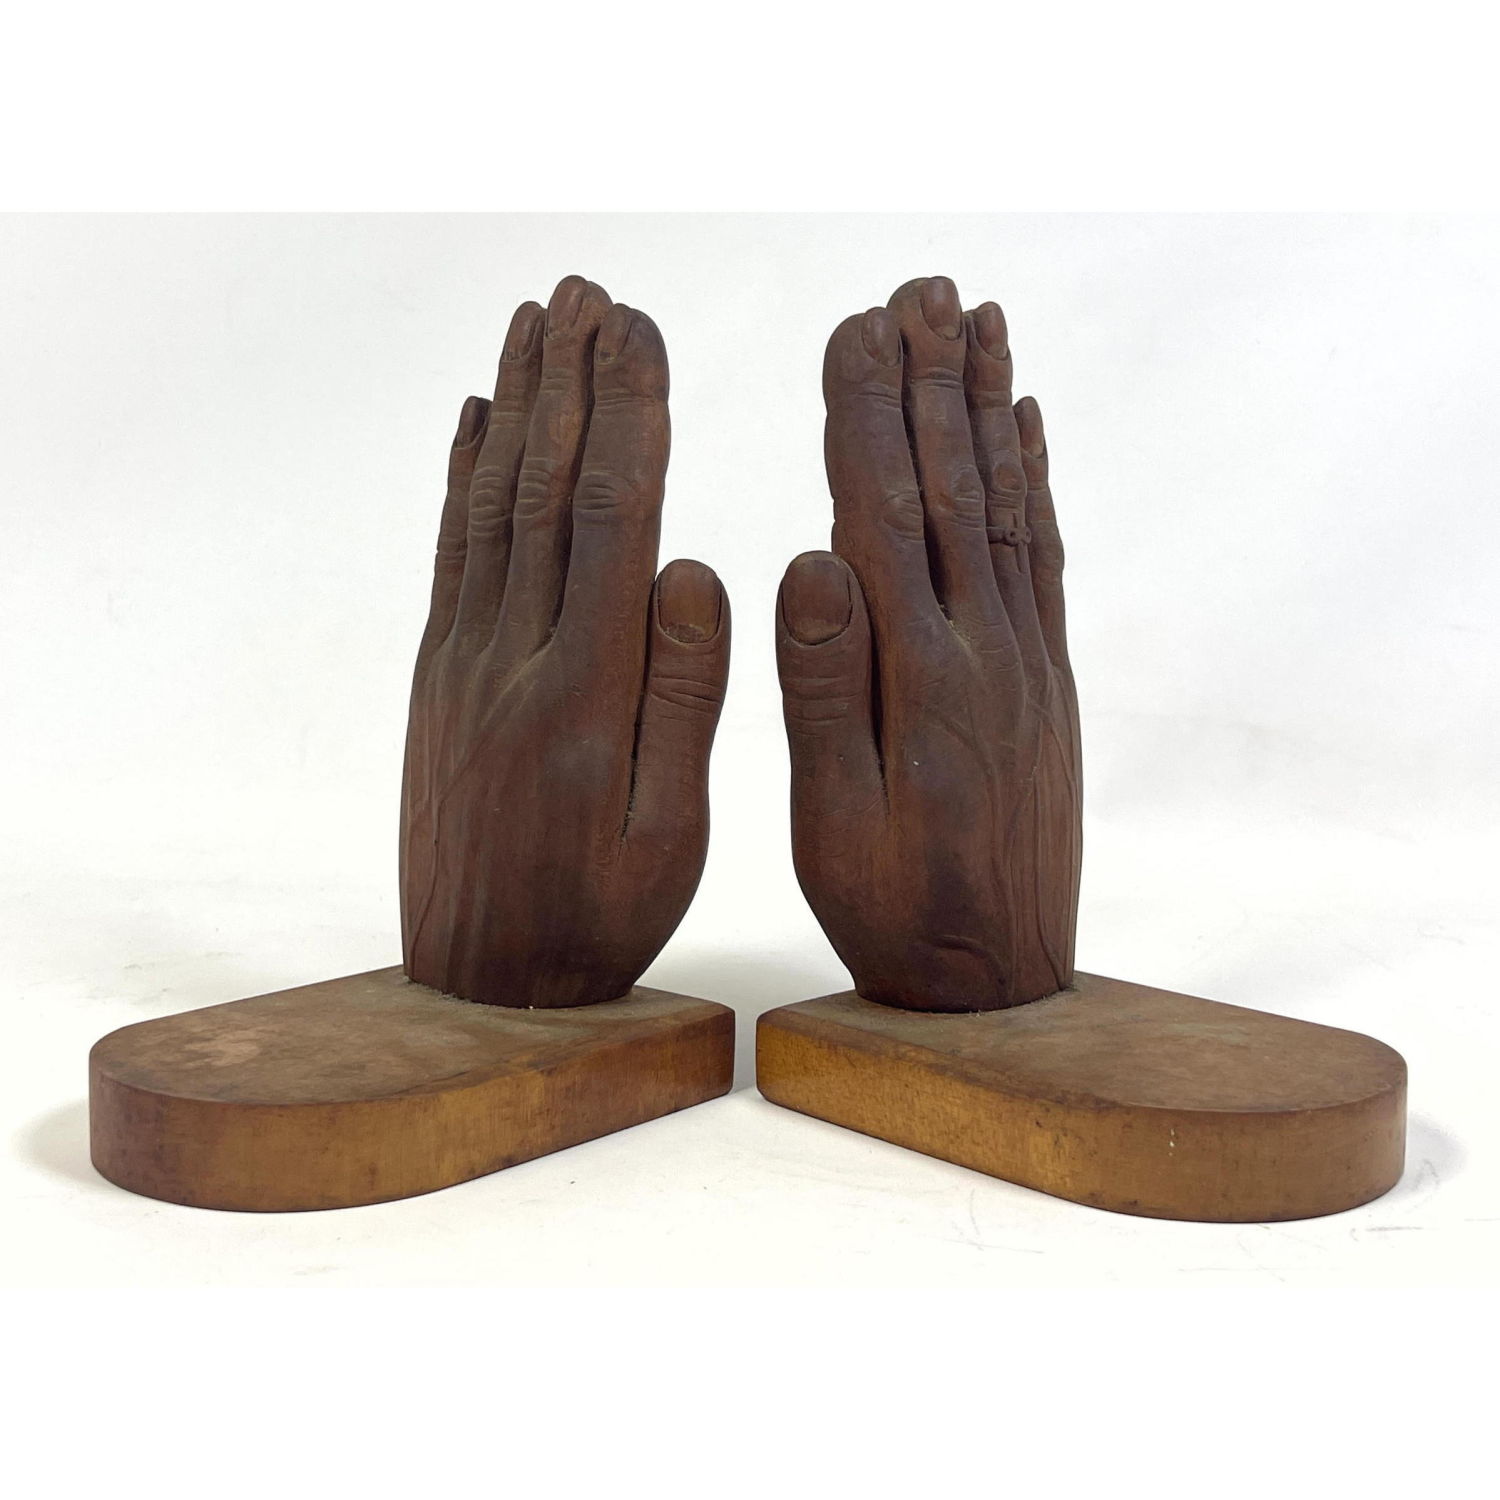 Pr Life Size Carved Wood Hand Sculpture